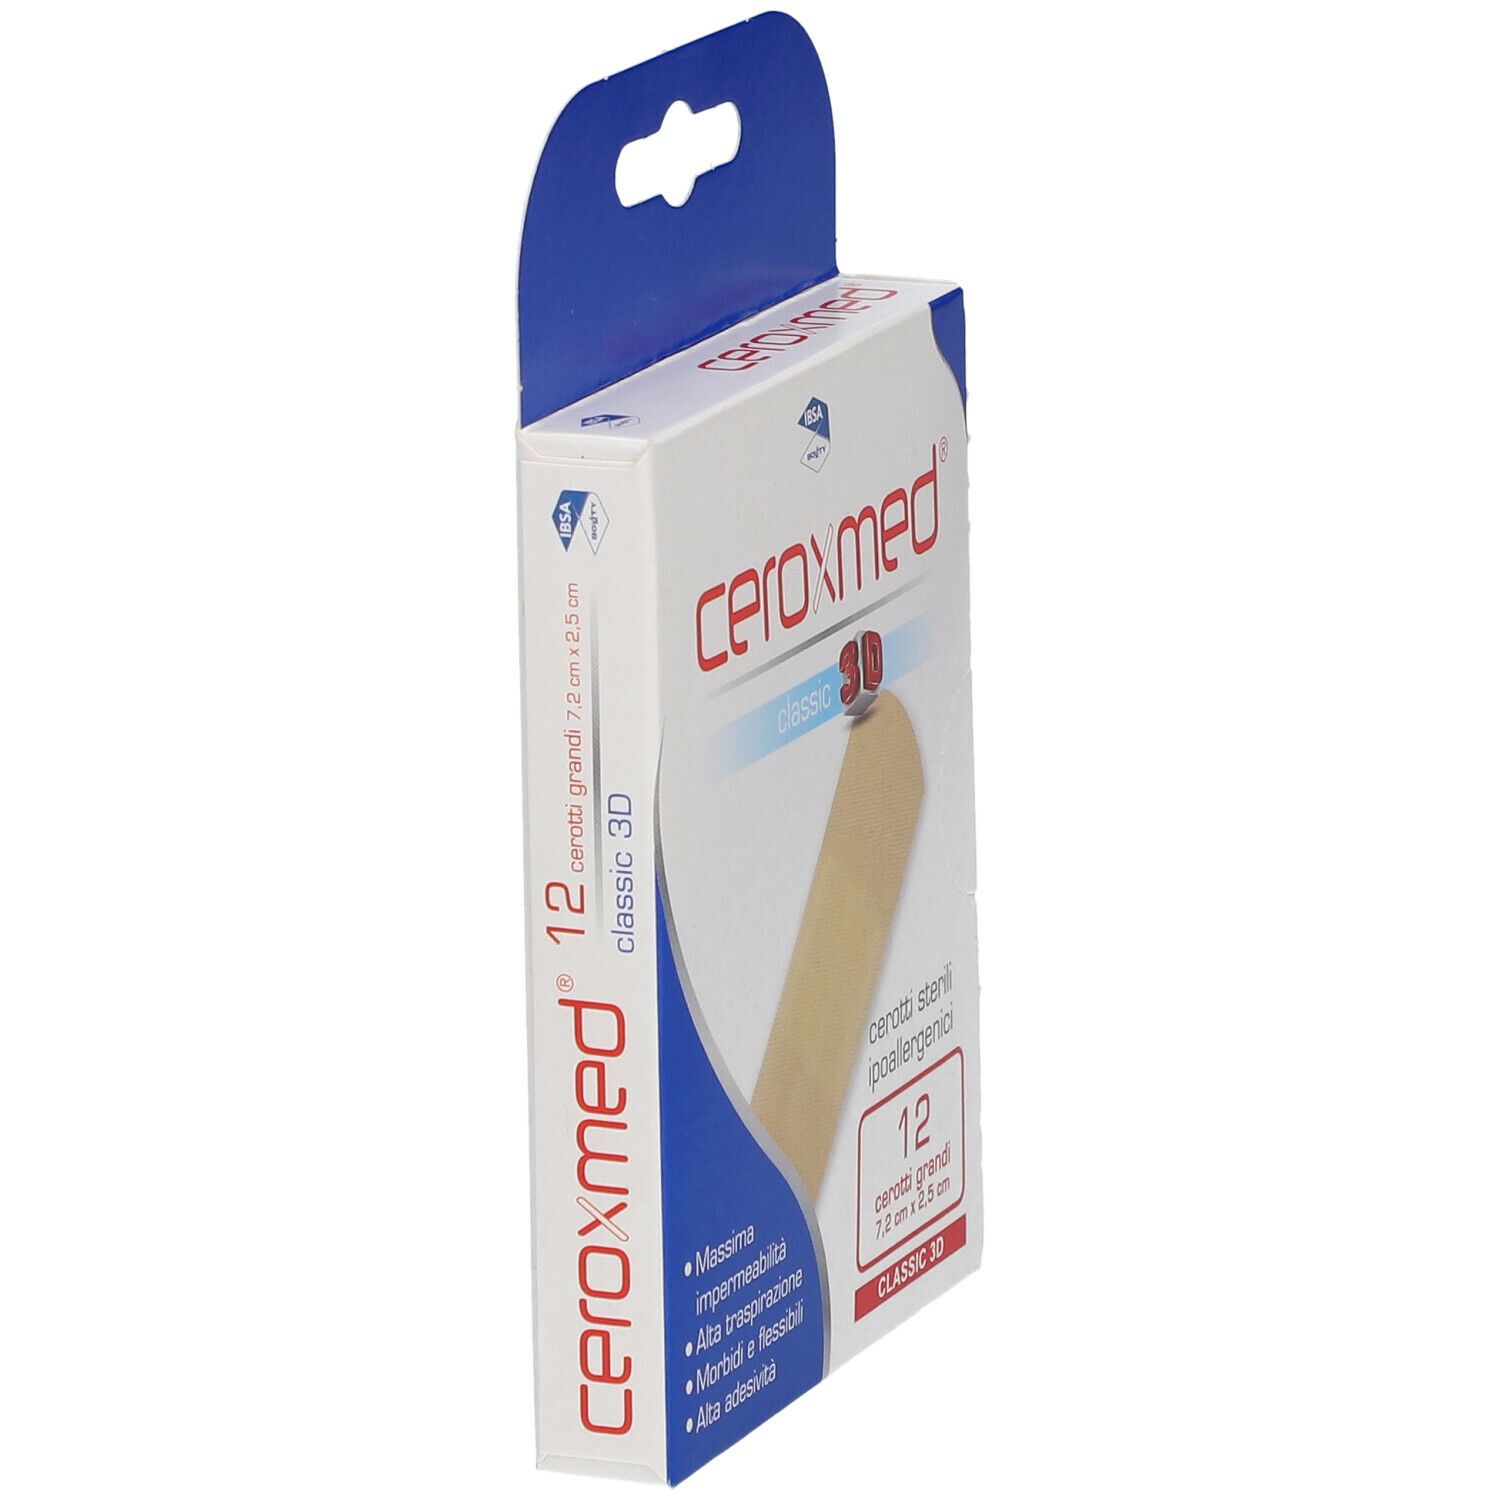 CEROXMED® CLASSIC 3D 7,2 cm x 2,5 cm